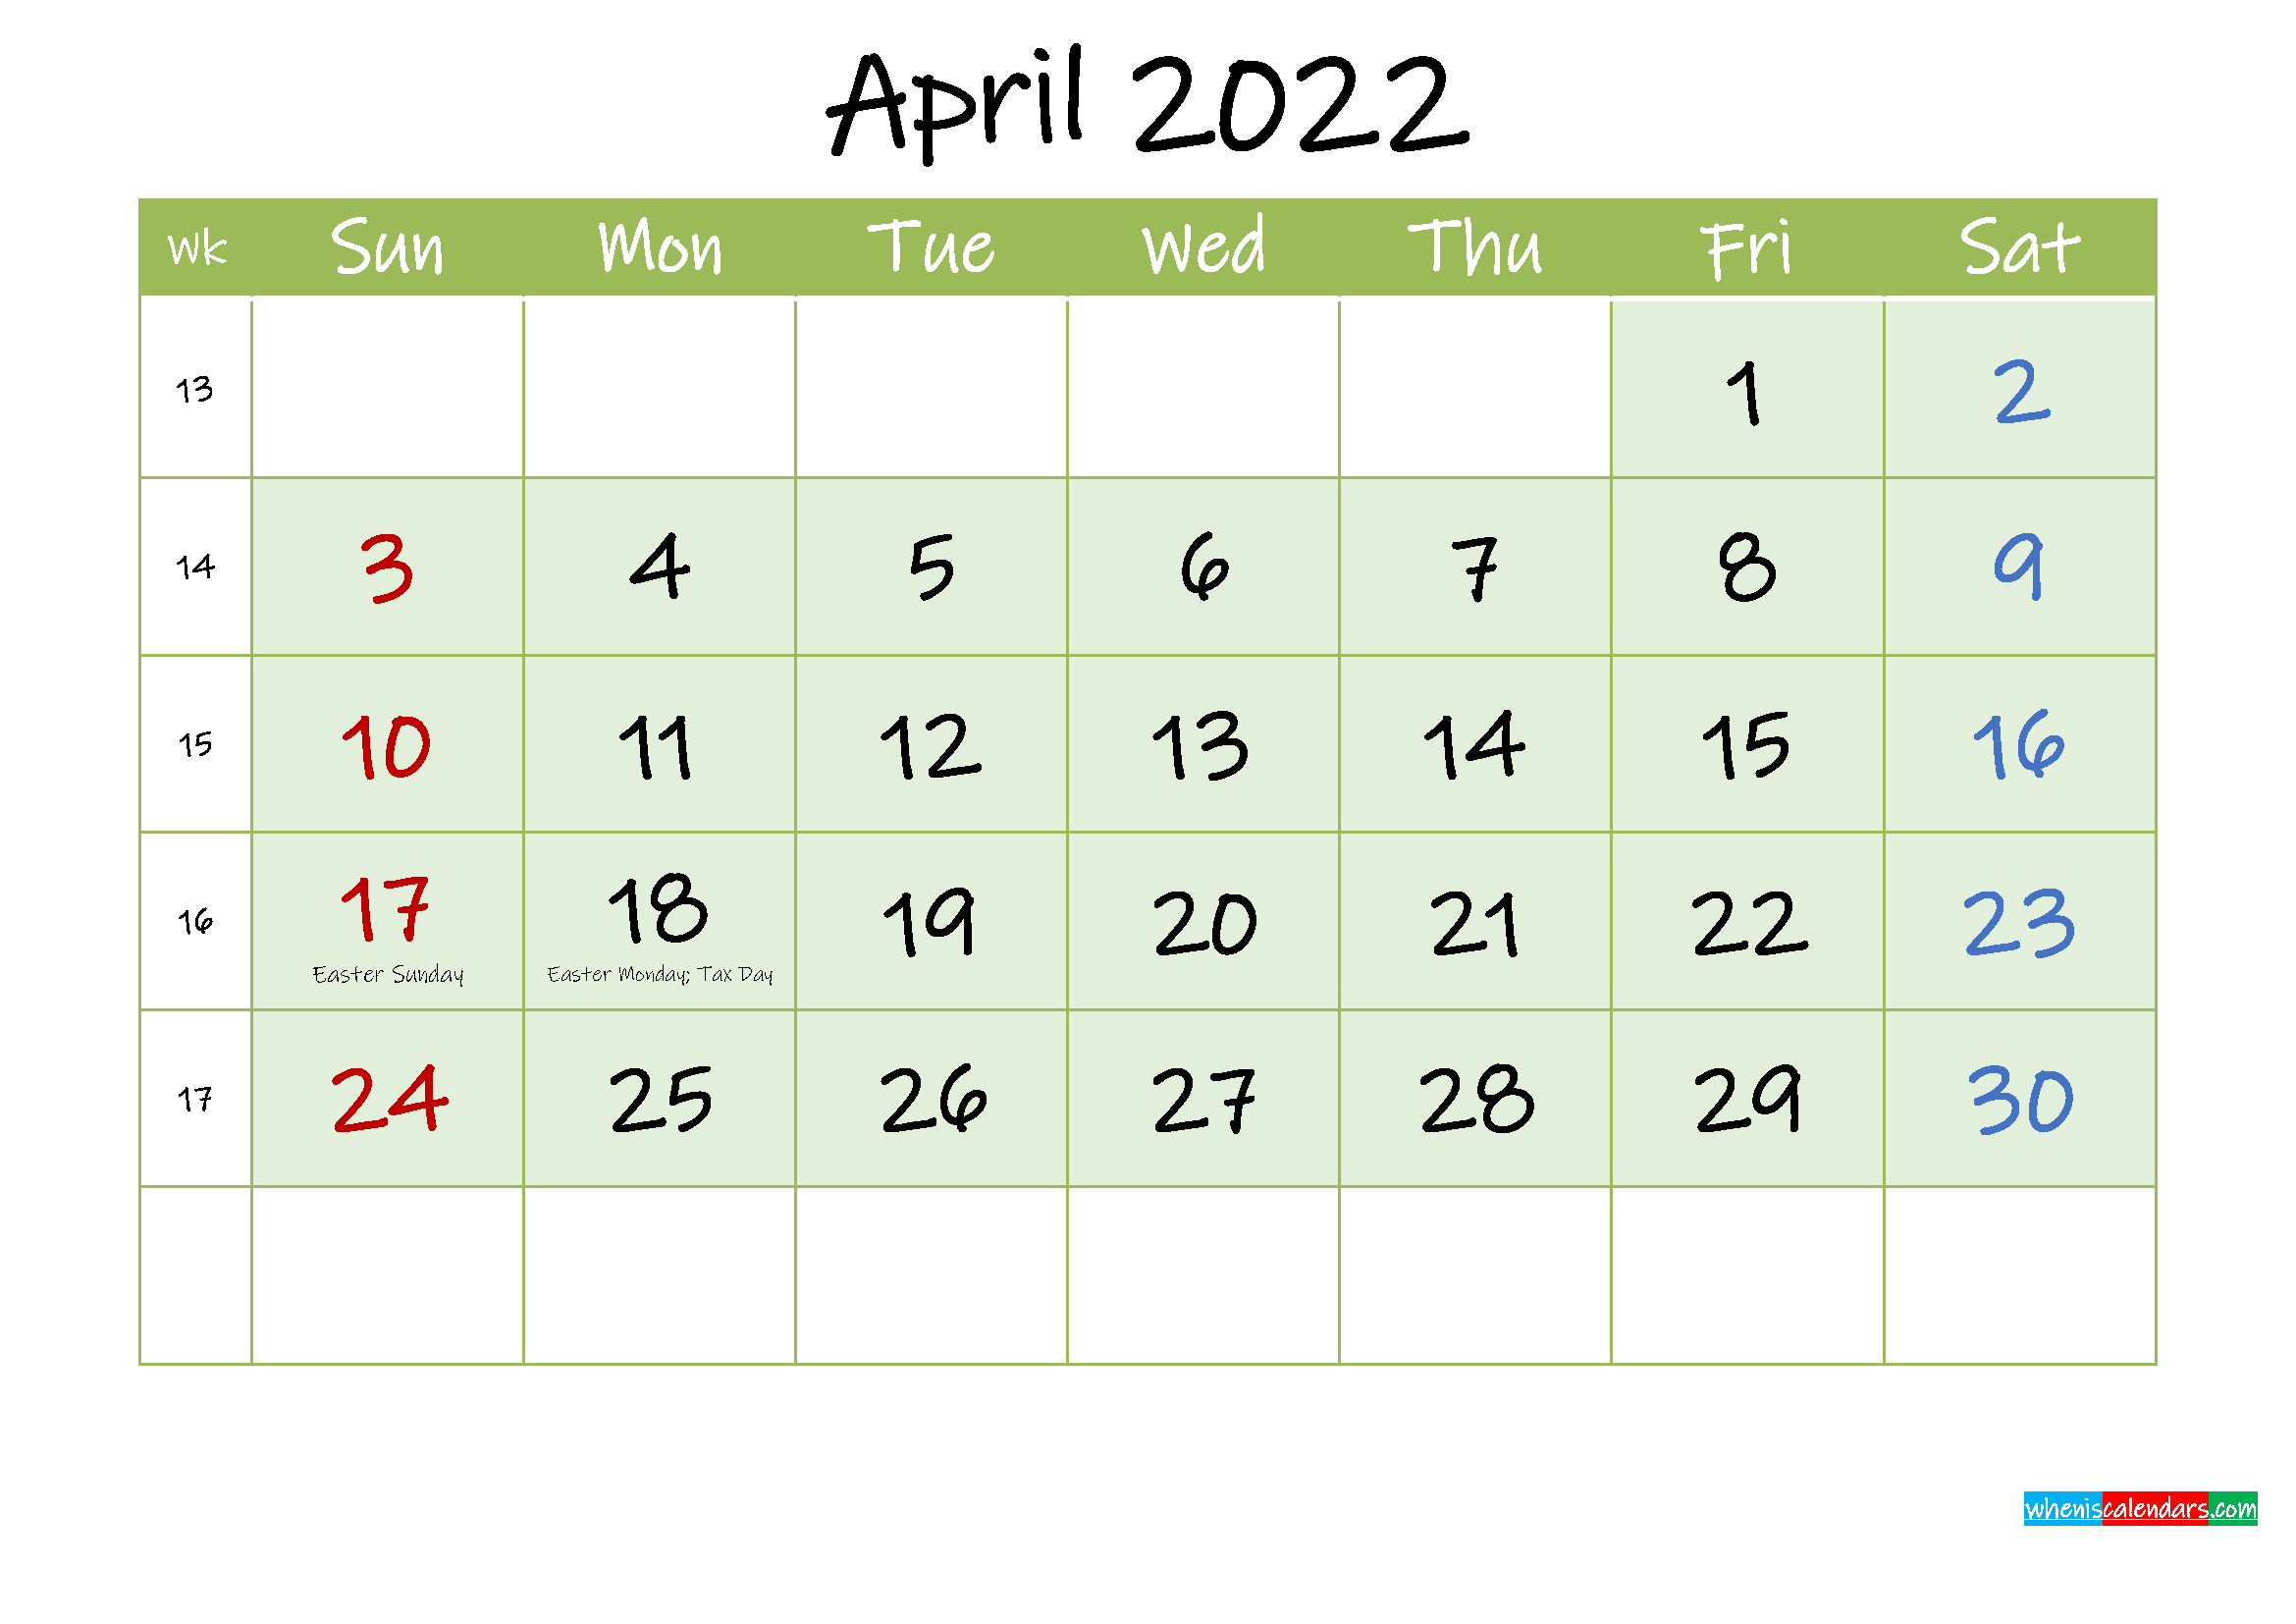 April 2022 Free Printable Calendar - Template Ink22M124